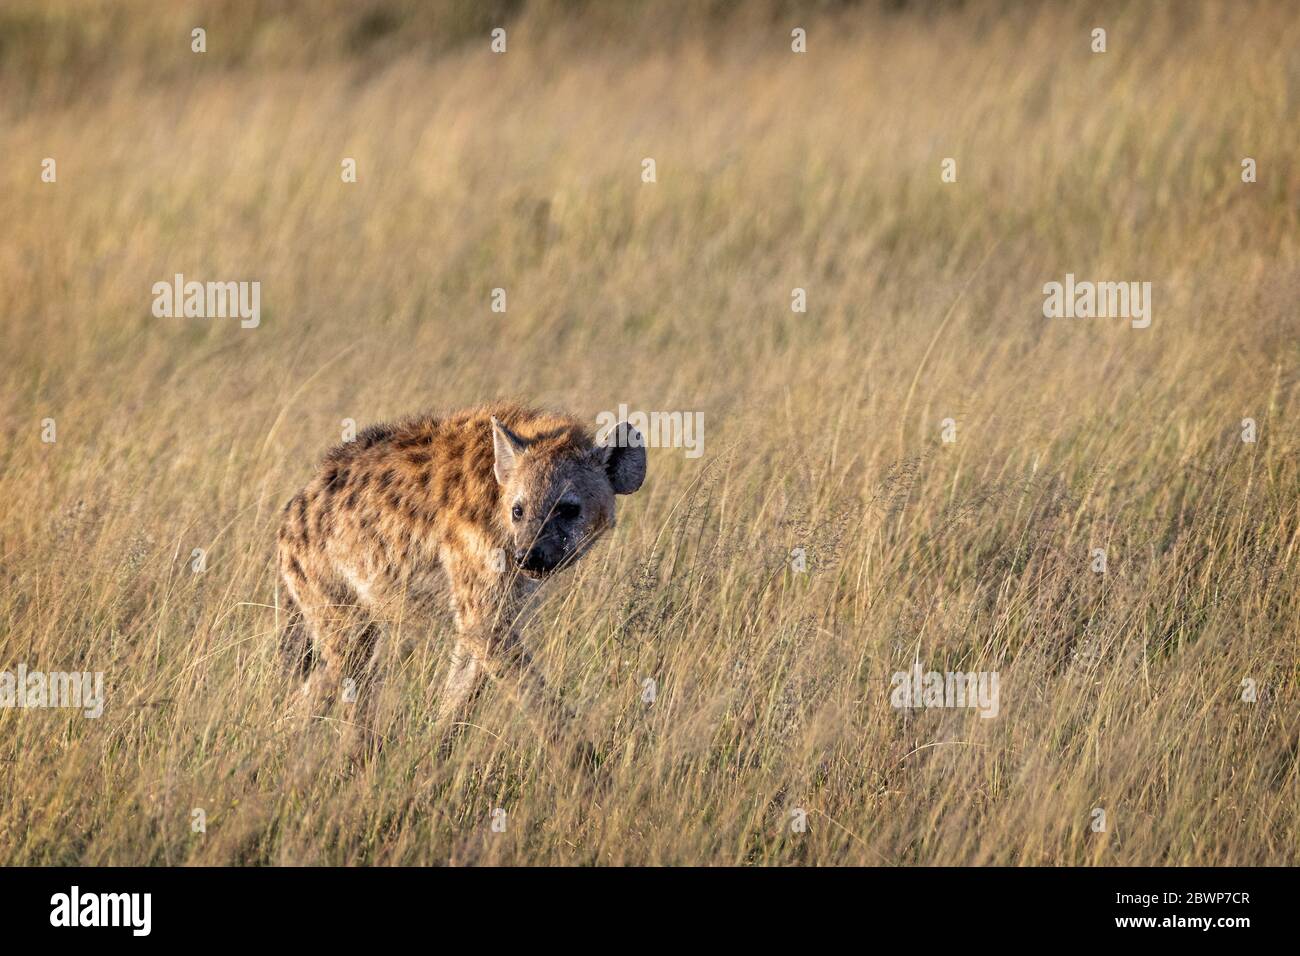 Spotted hyena walking through grasslands in Kenya, Africa Stock Photo